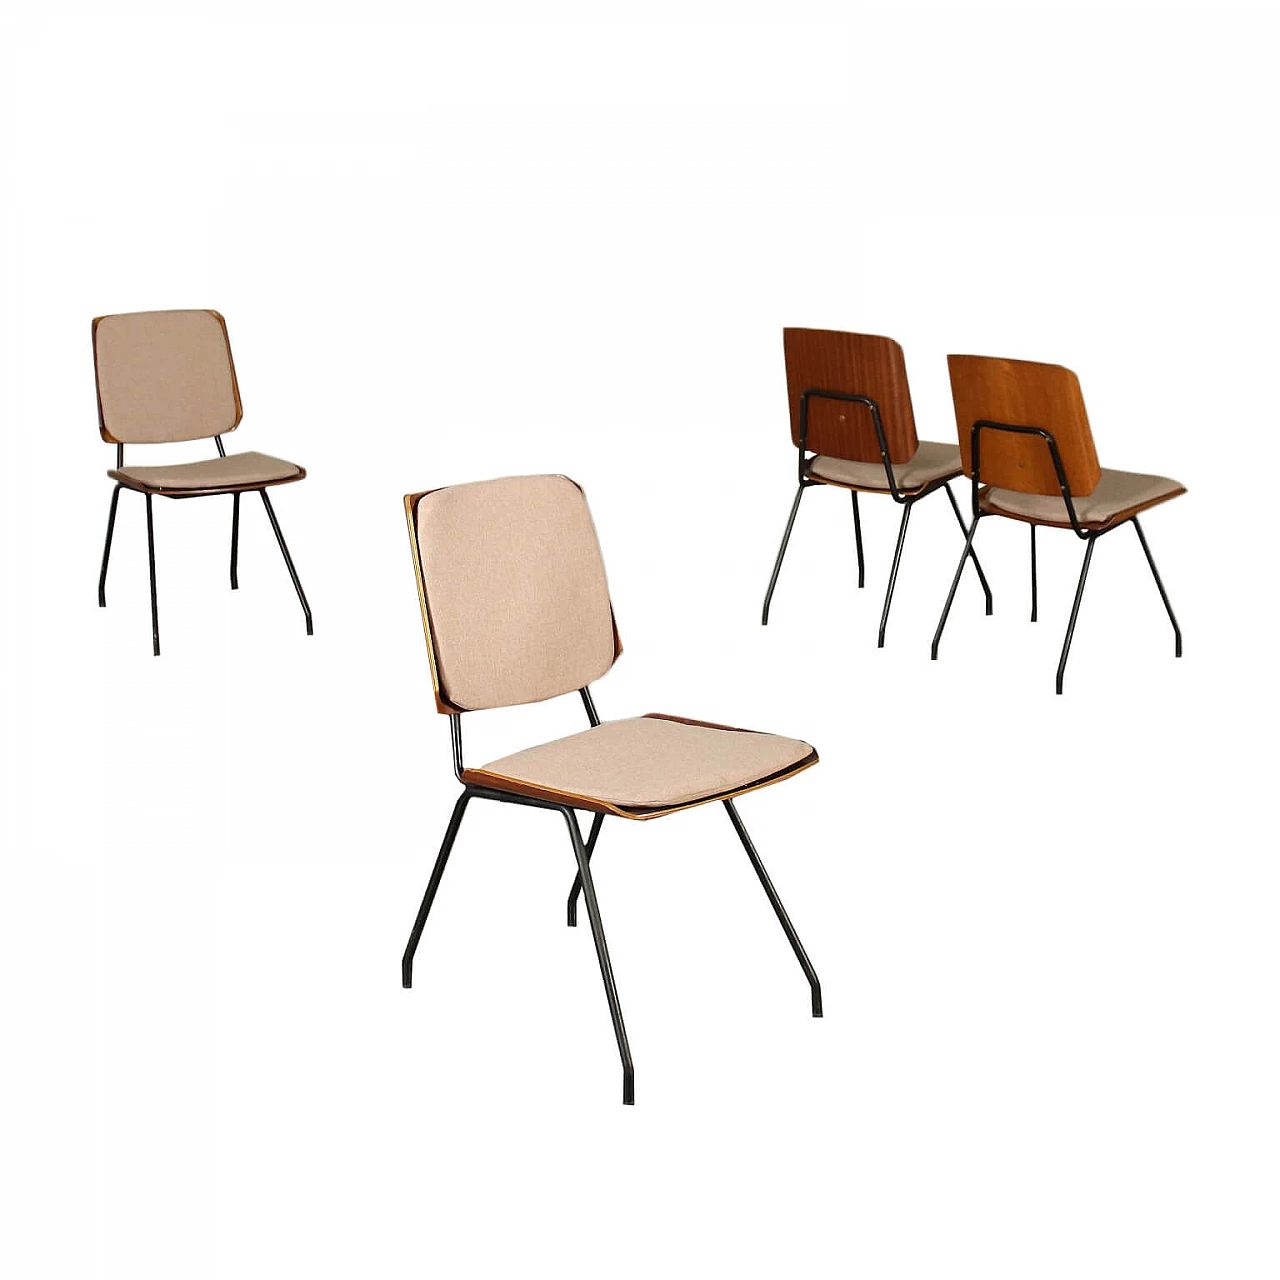 Group Of Four Chairs Osvaldo Borsani Tecno Plywood Italy 1950s 1960s 1437598